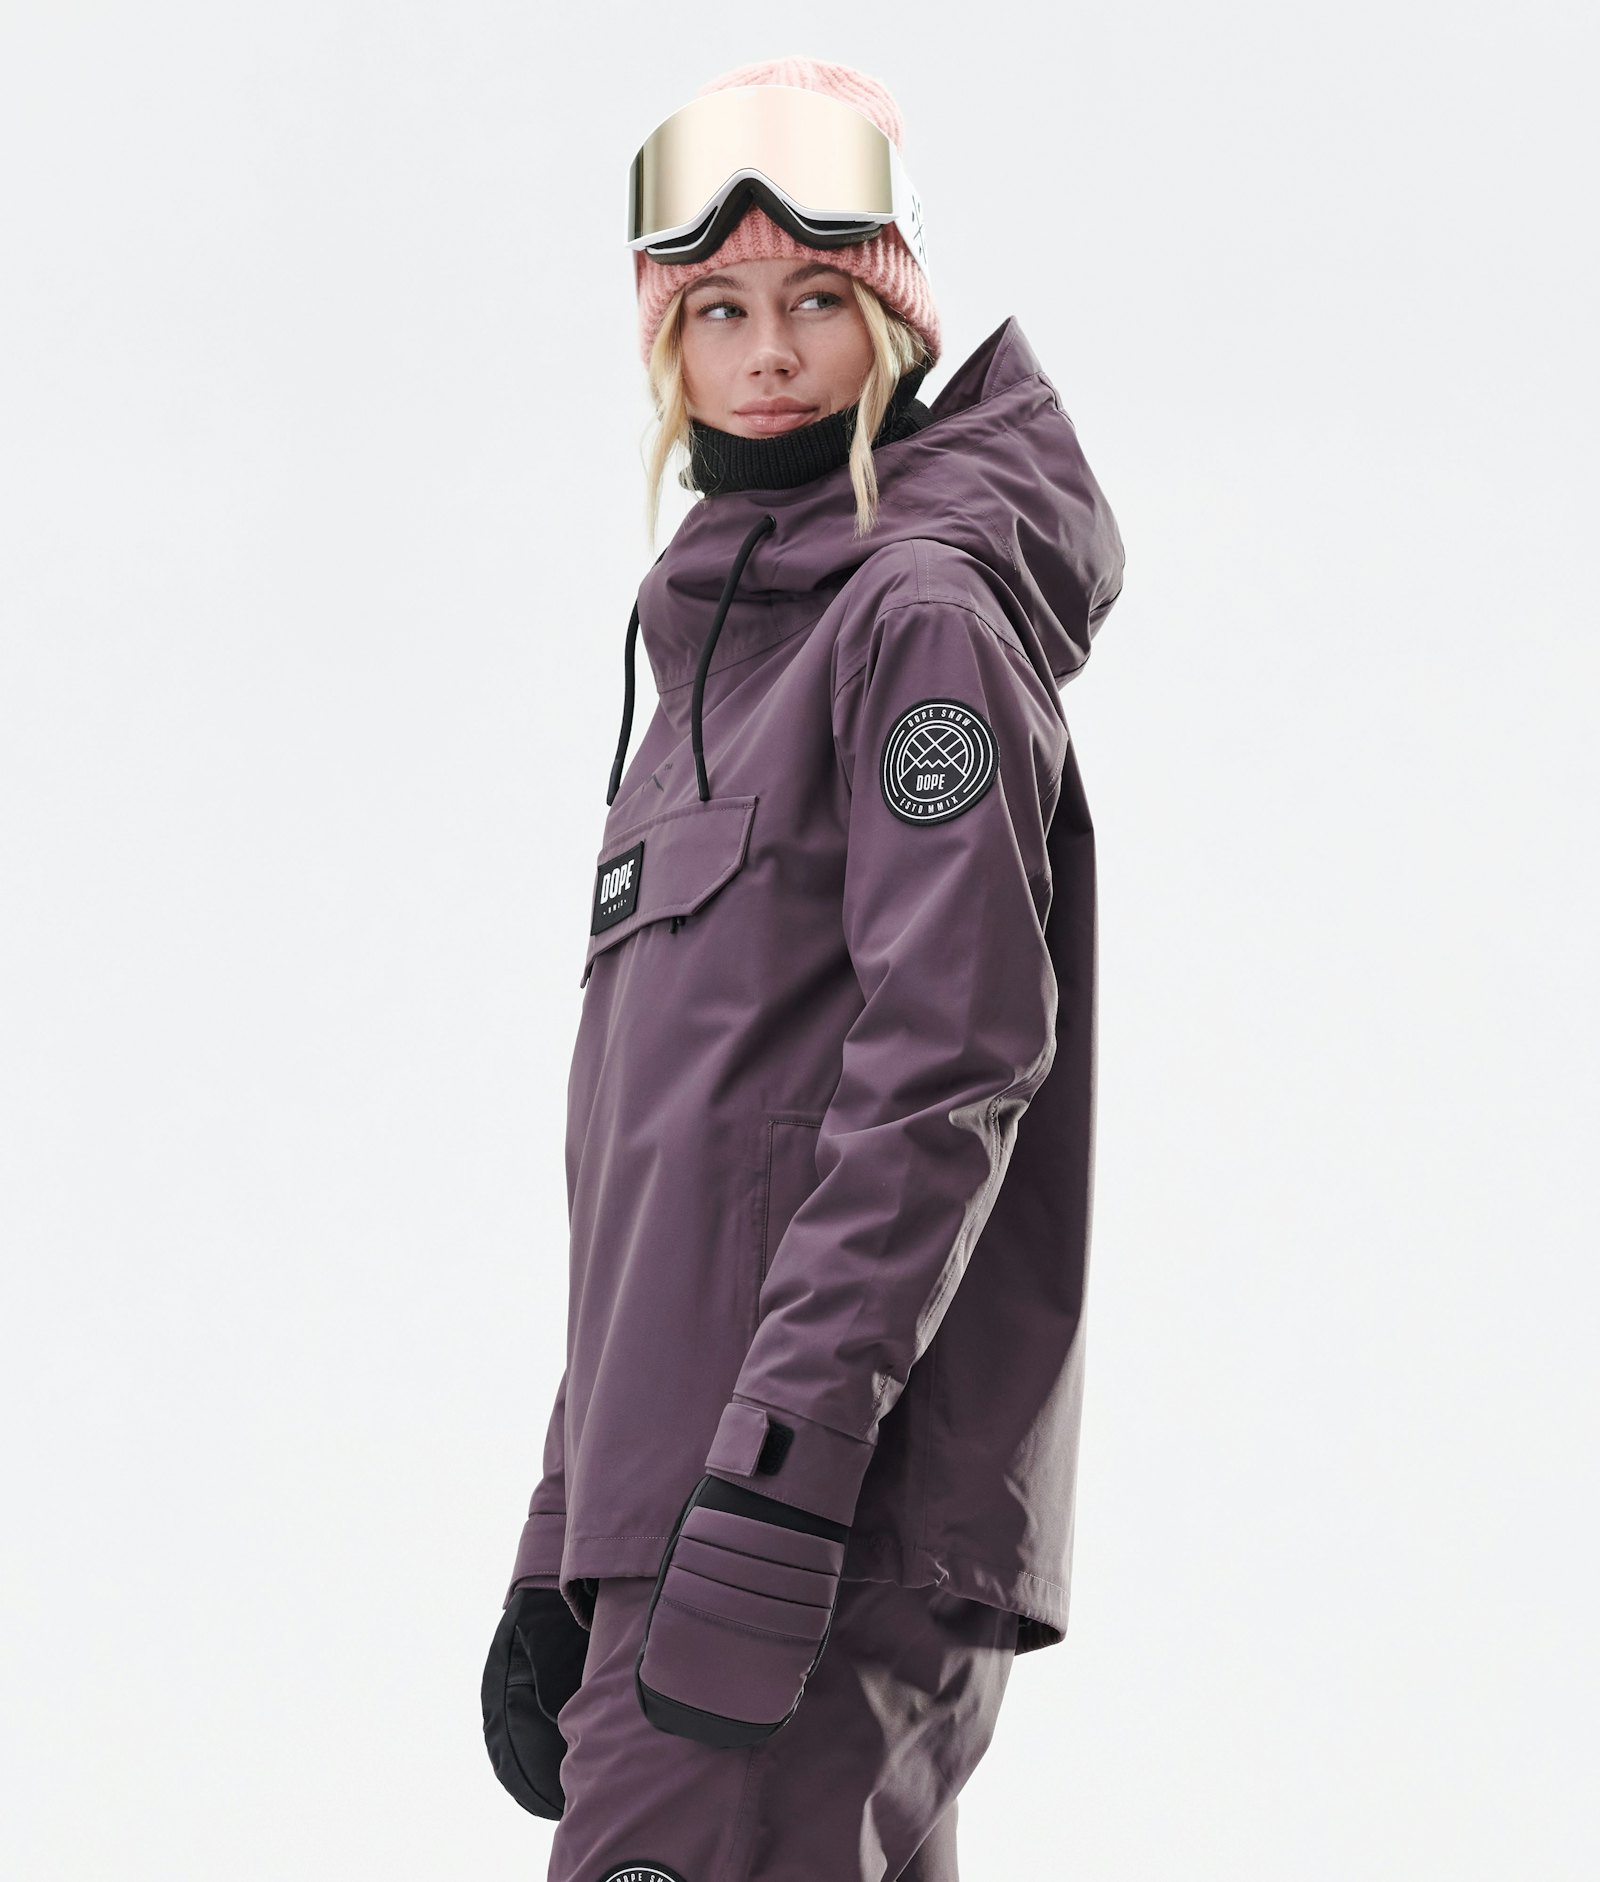 Blizzard W 2020 Ski Jacket Women Faded Grape